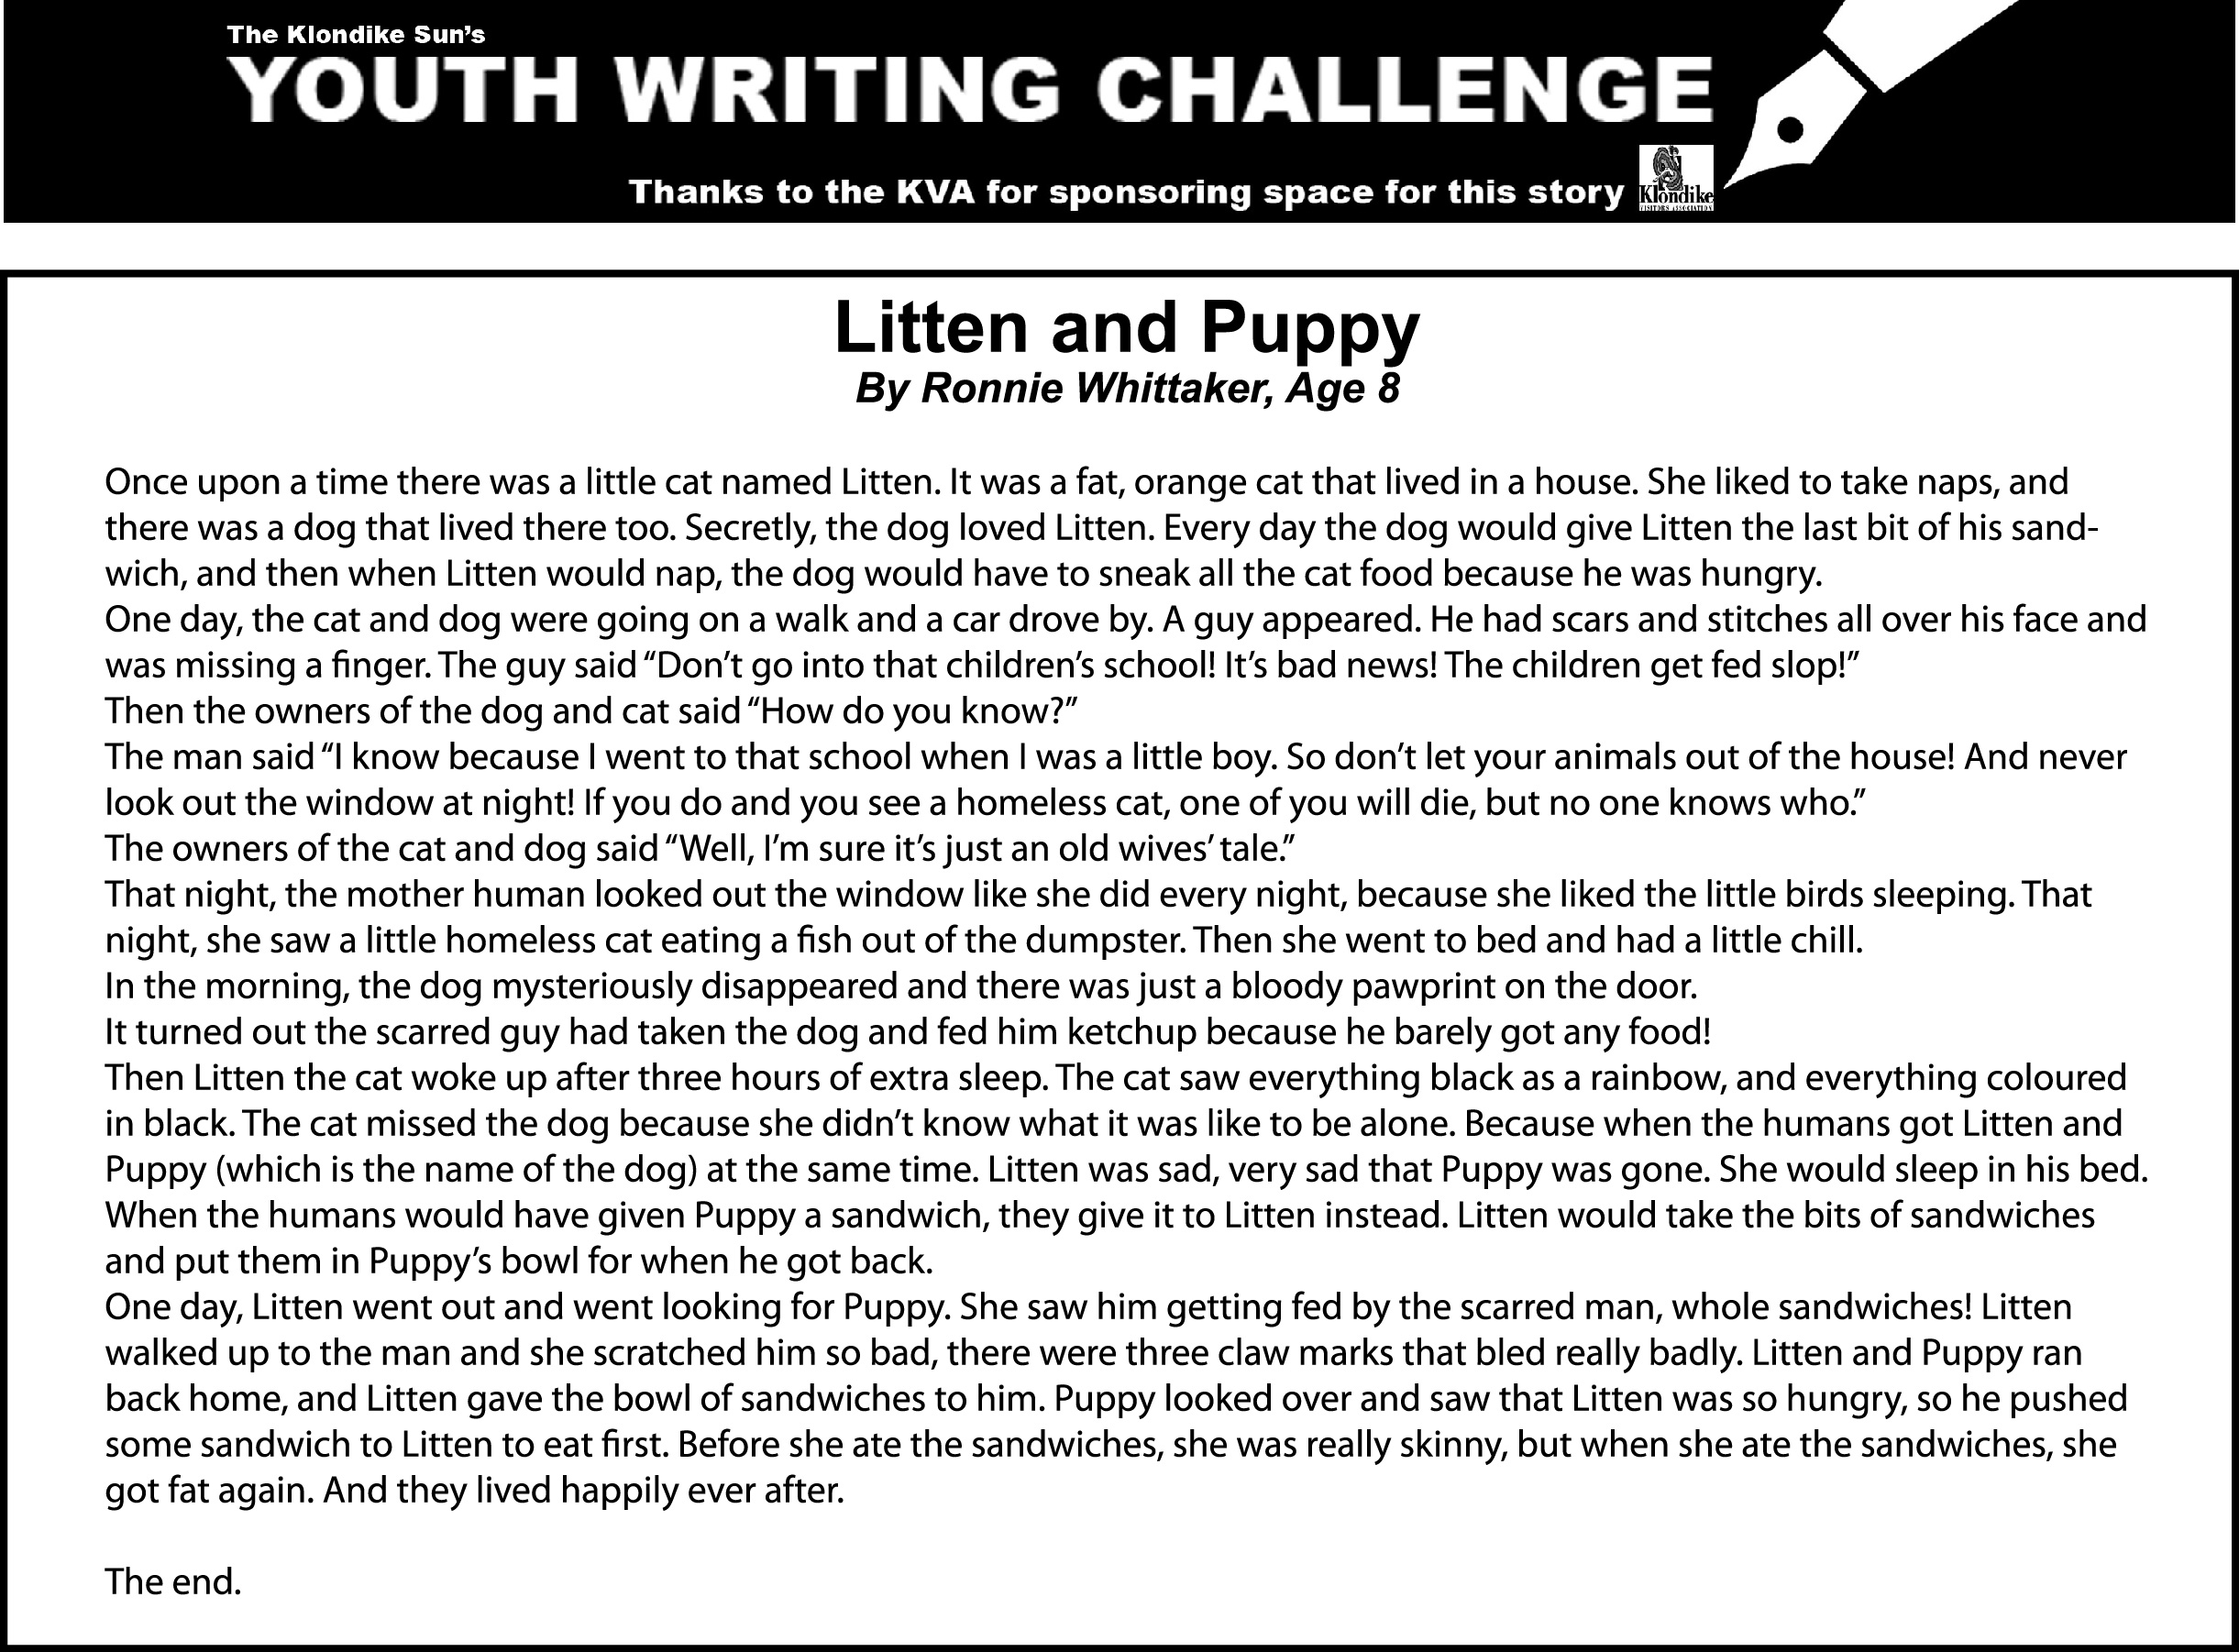 litten and puppy - YWC